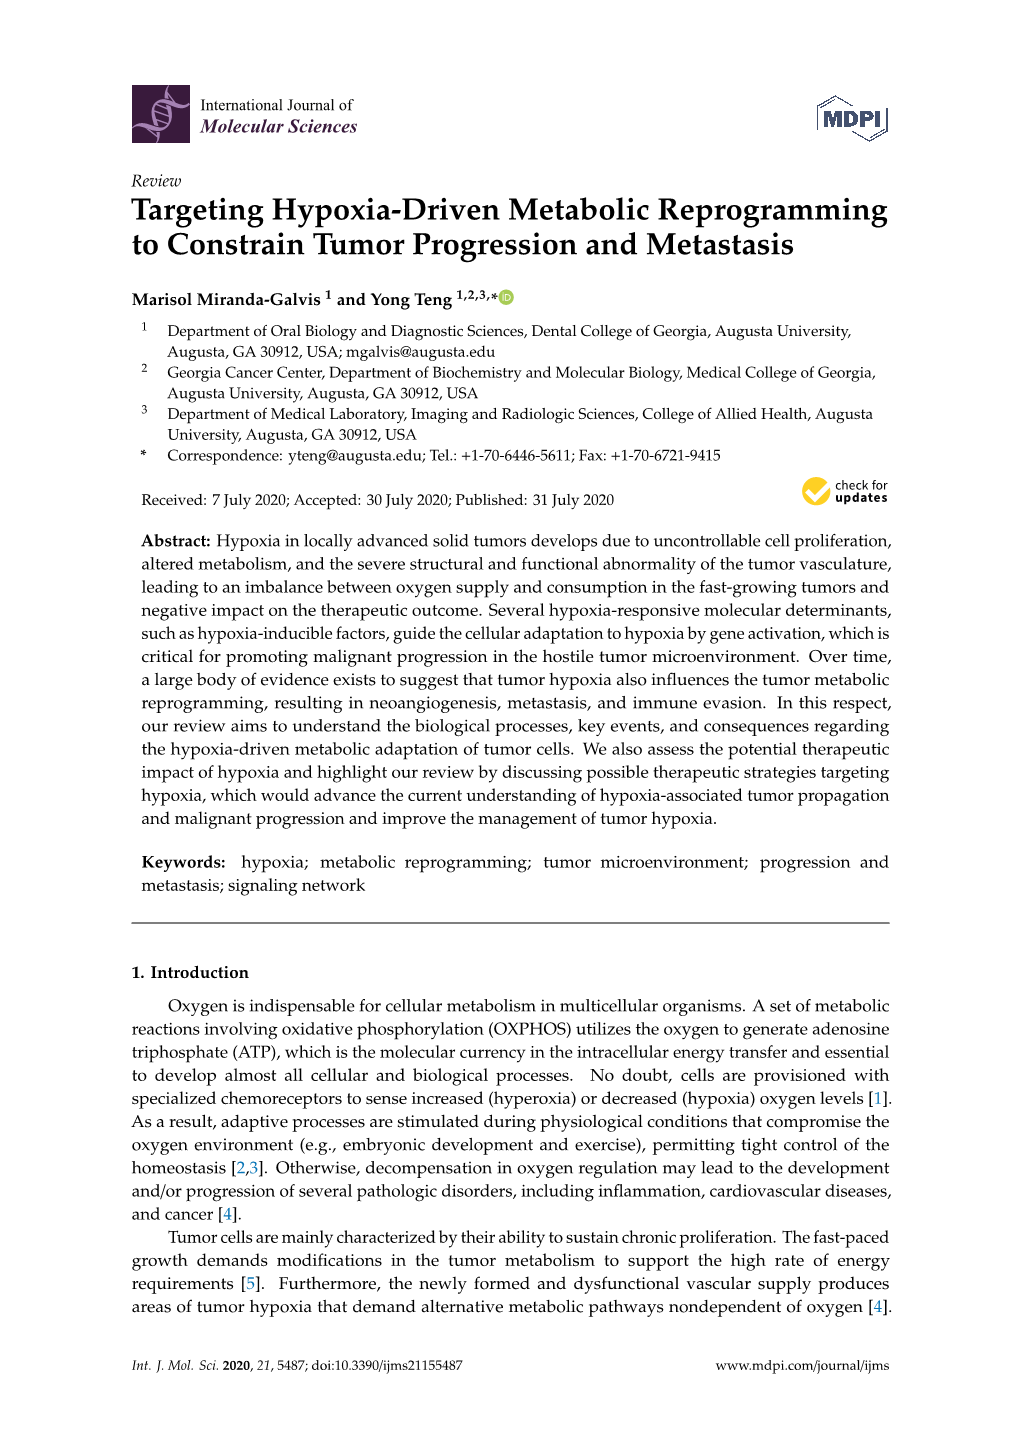 Targeting Hypoxia-Driven Metabolic Reprogramming to Constrain Tumor Progression and Metastasis